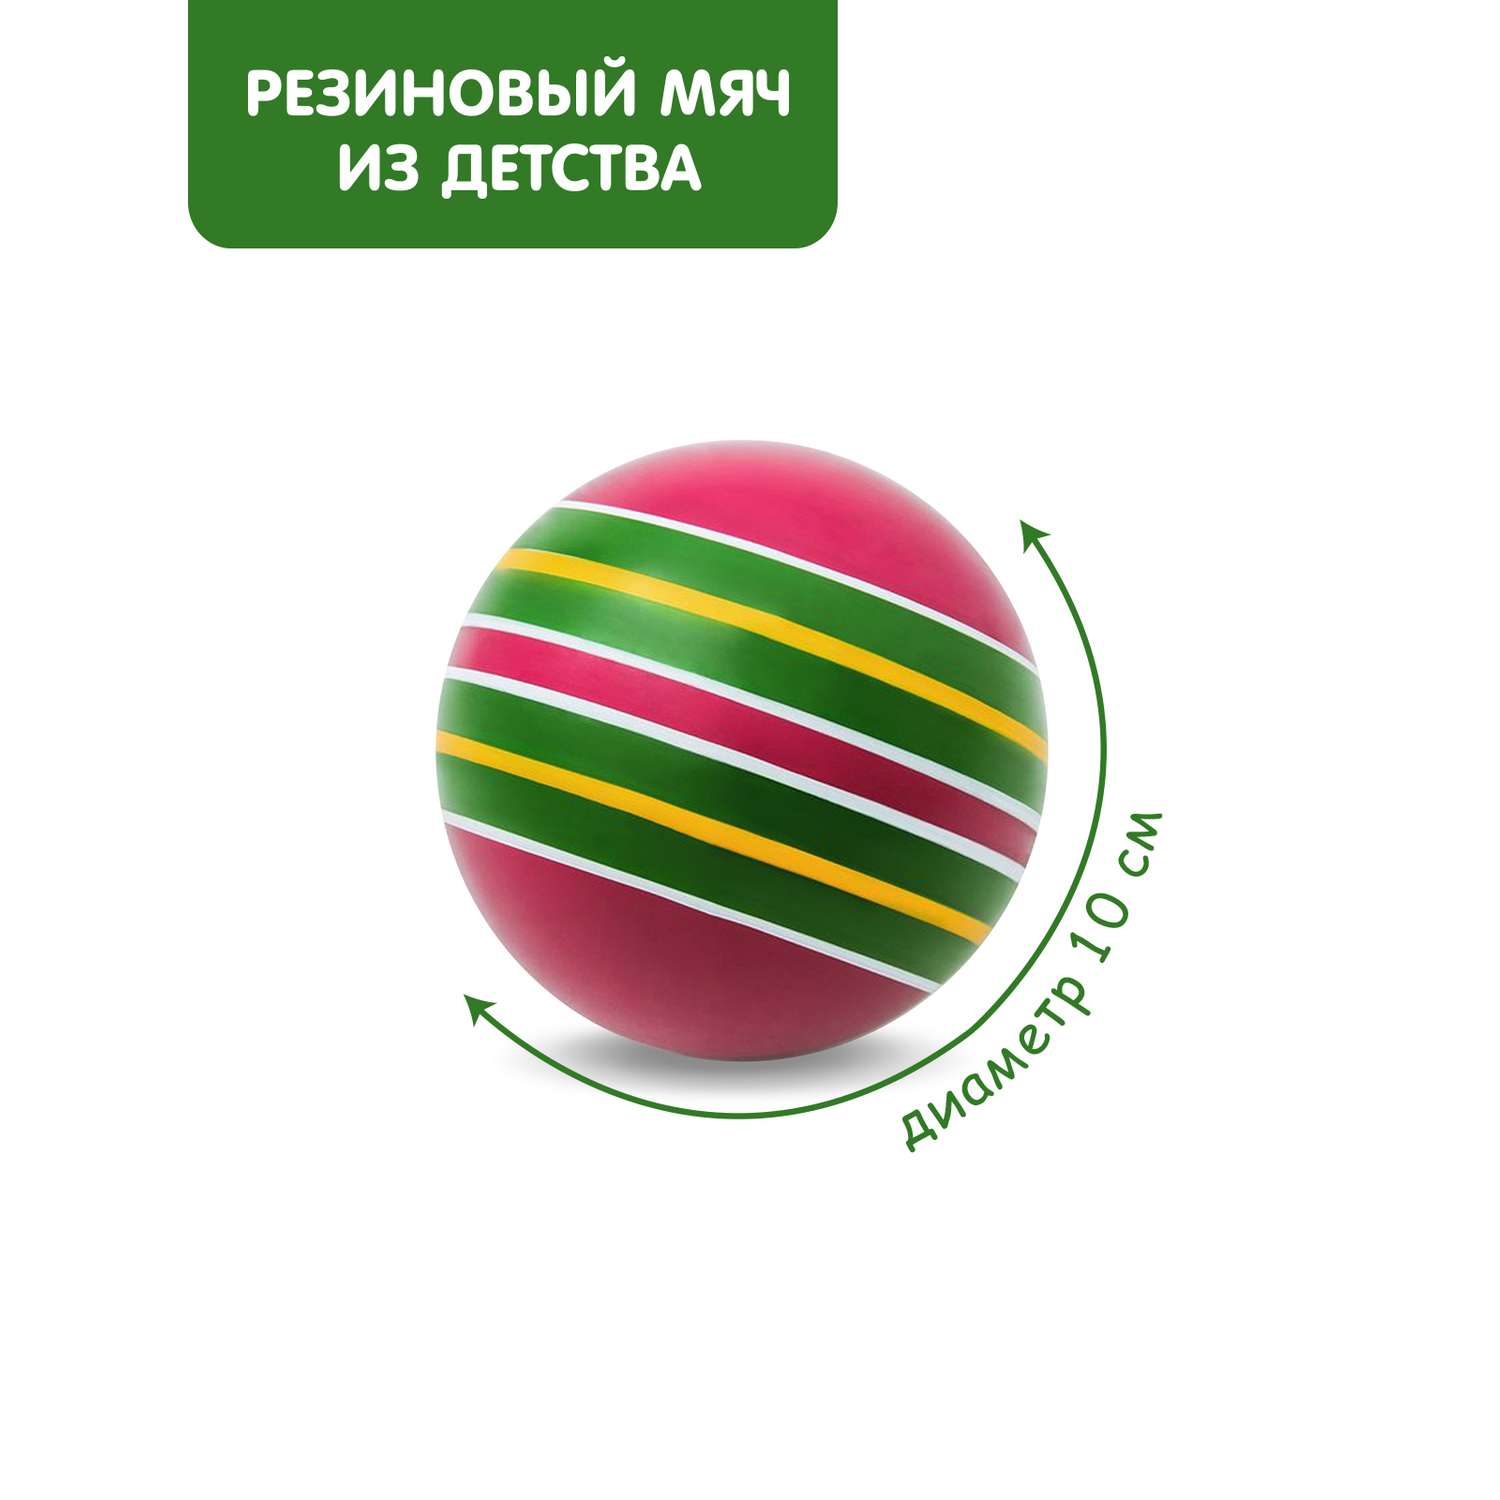 Мяч ЧАПАЕВ диаметр 100 мм Тропинки малиновый фон зеленая полоска - фото 1